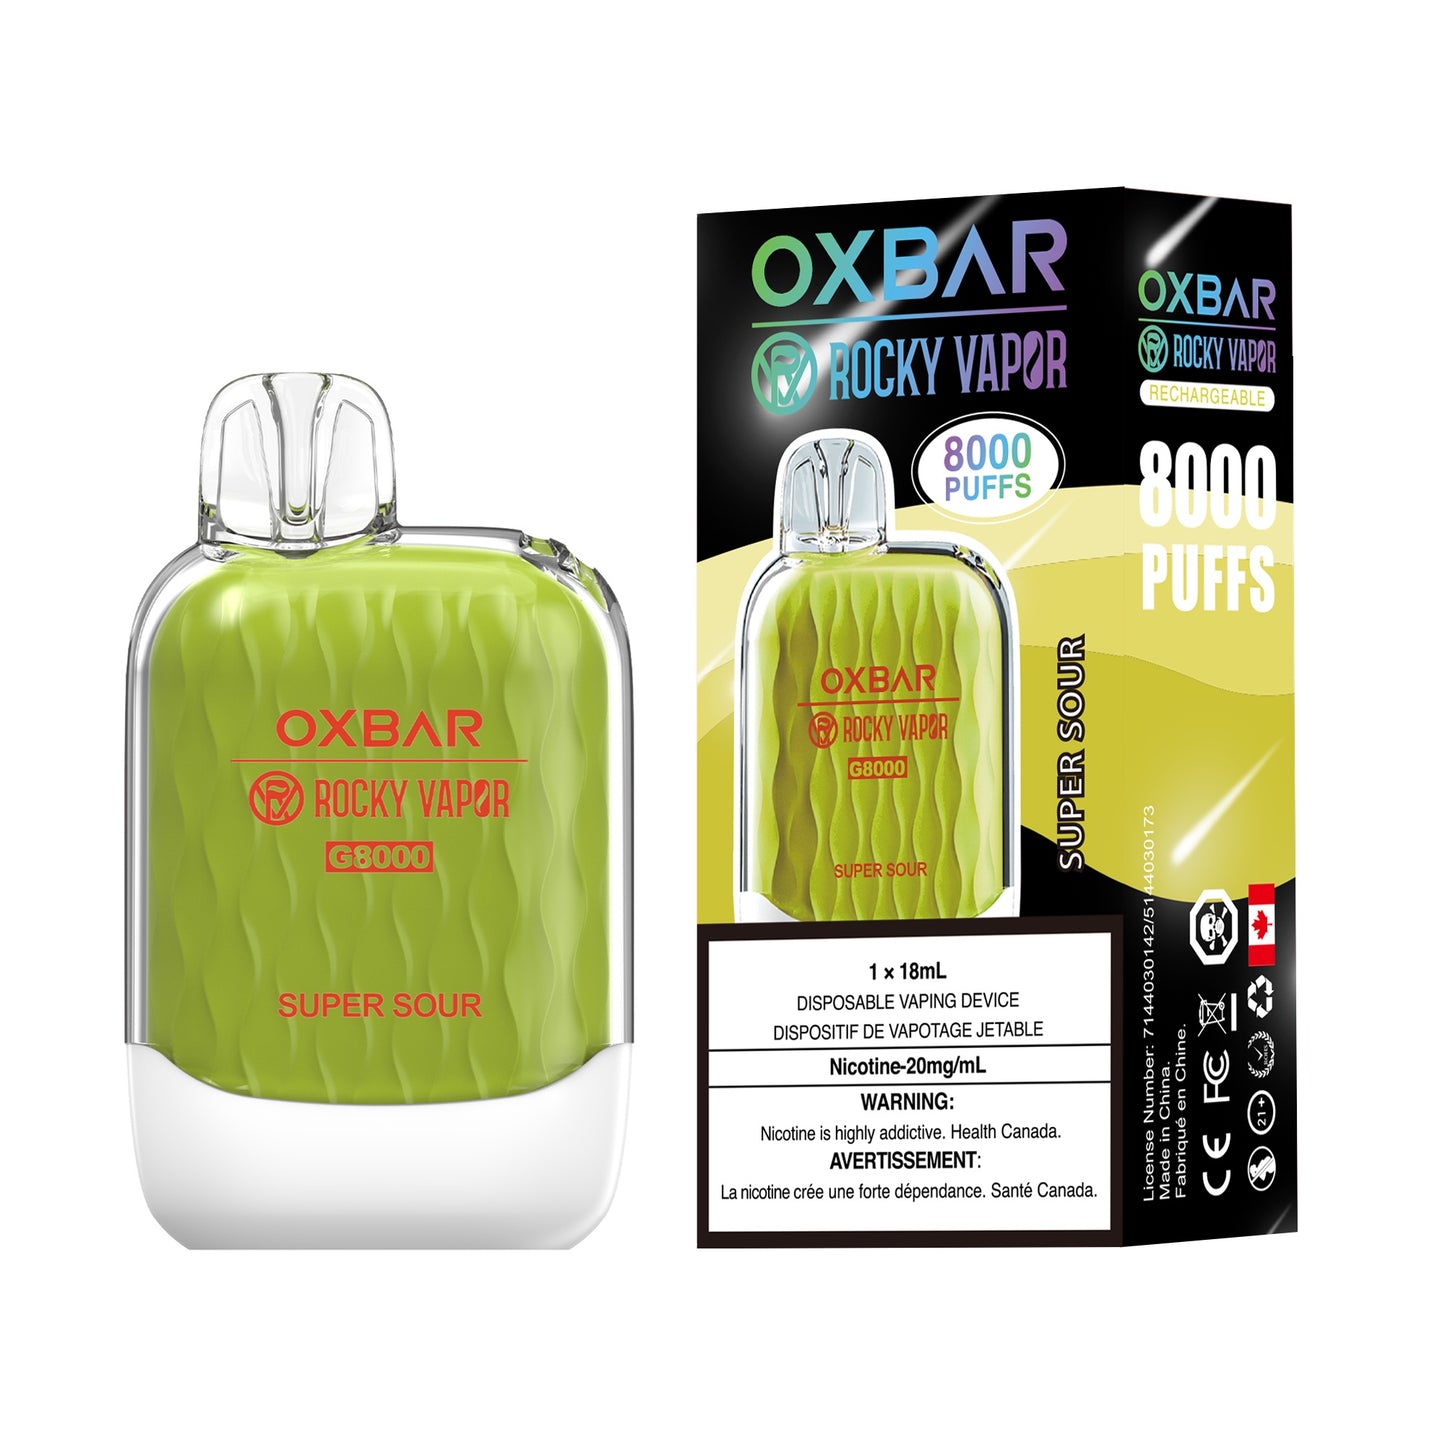 OXBAR G8000 - Super Sour